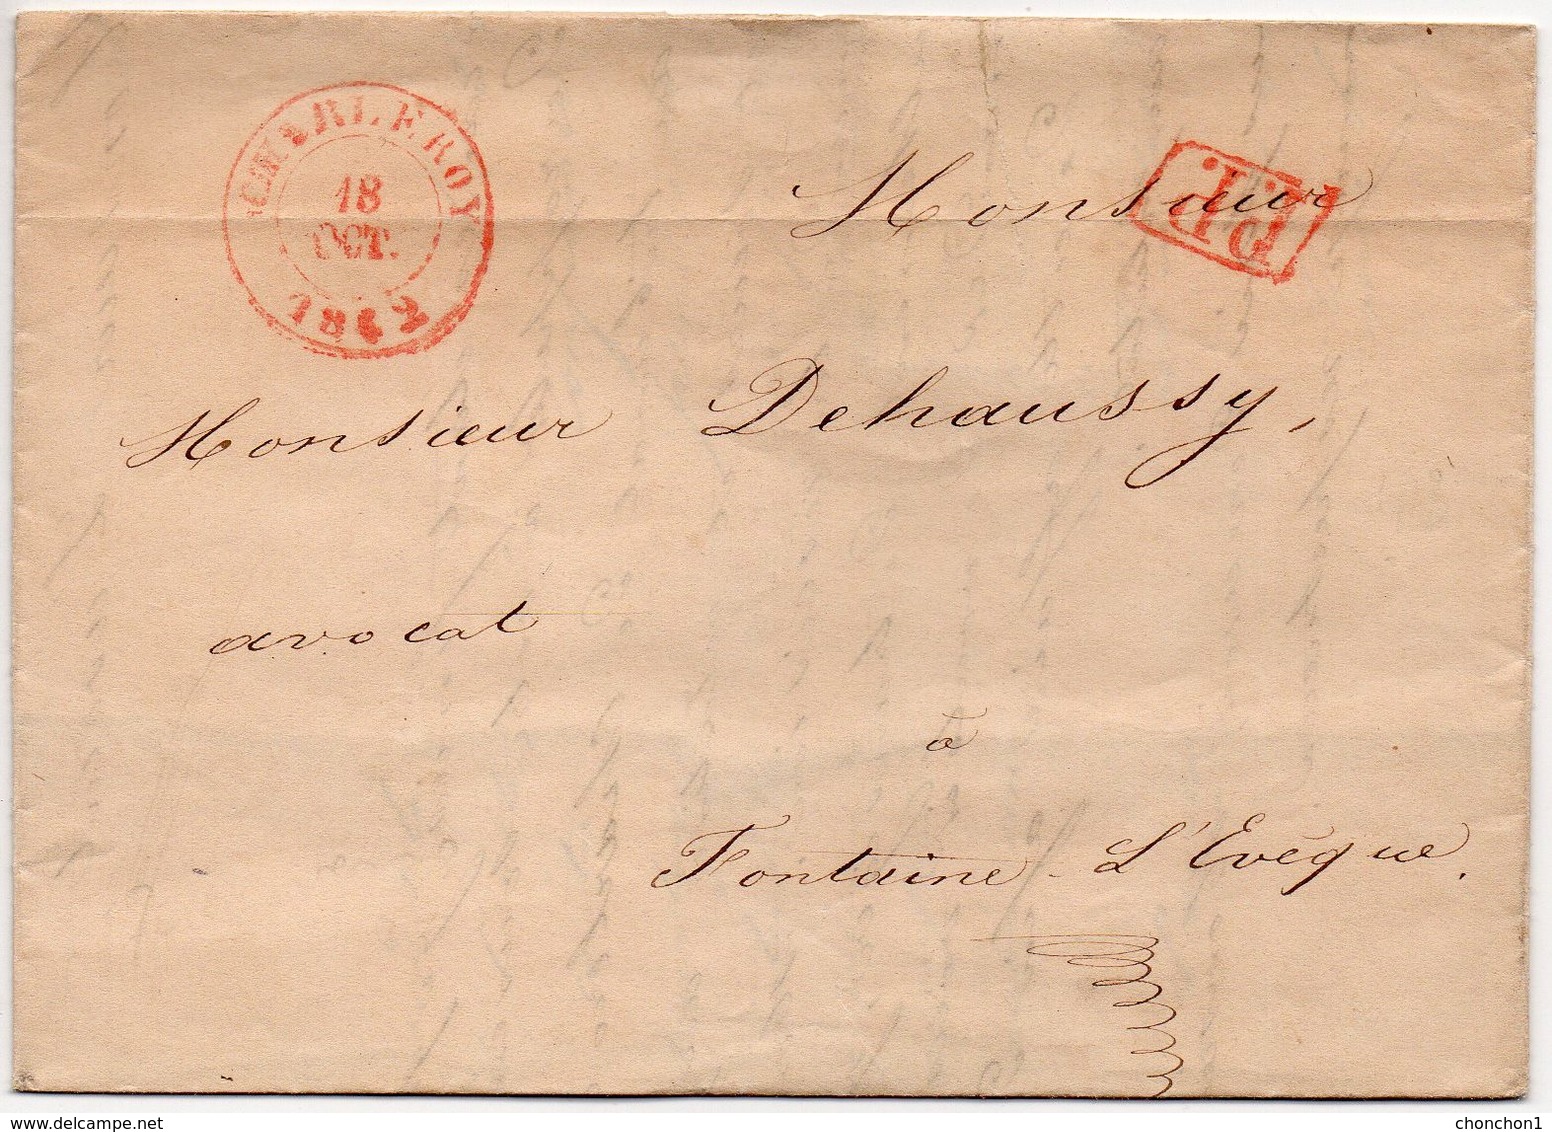 LAC - BELGIQUE - 1842 - GILLY Via CHARLEROI CHARLEROY  Vers FONTAINE L'EVEQUE- Griffe PP -   AA6 - 1830-1849 (Belgique Indépendante)